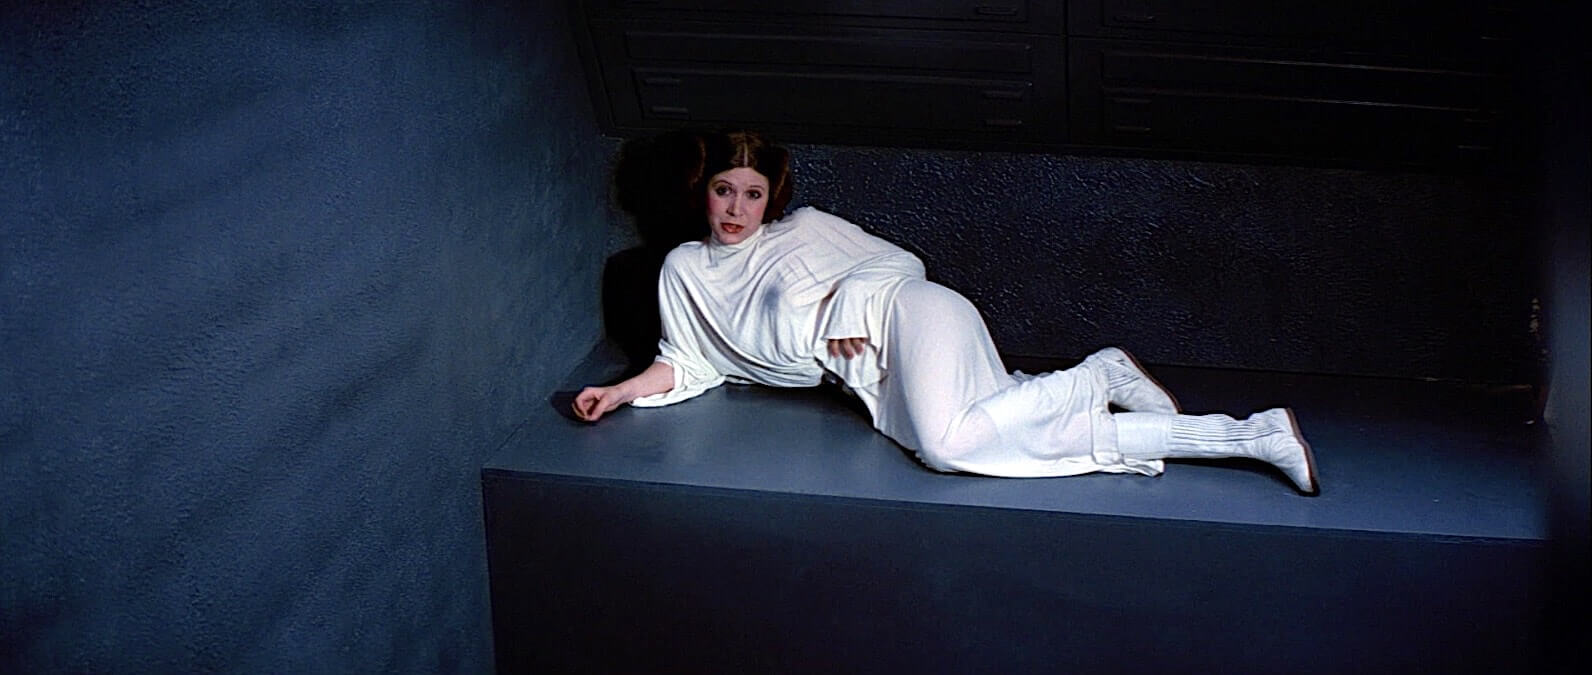 How to Write a Story Outline - Free Script Template - Princess Leia Star Wars